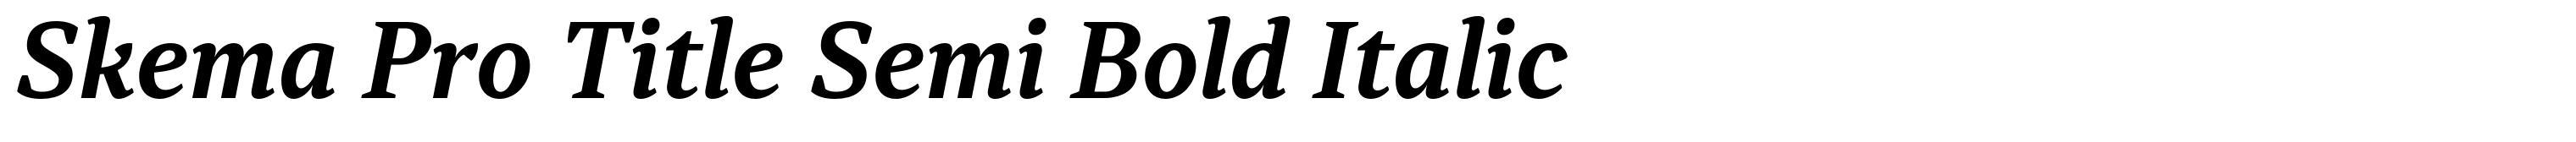 Skema Pro Title Semi Bold Italic